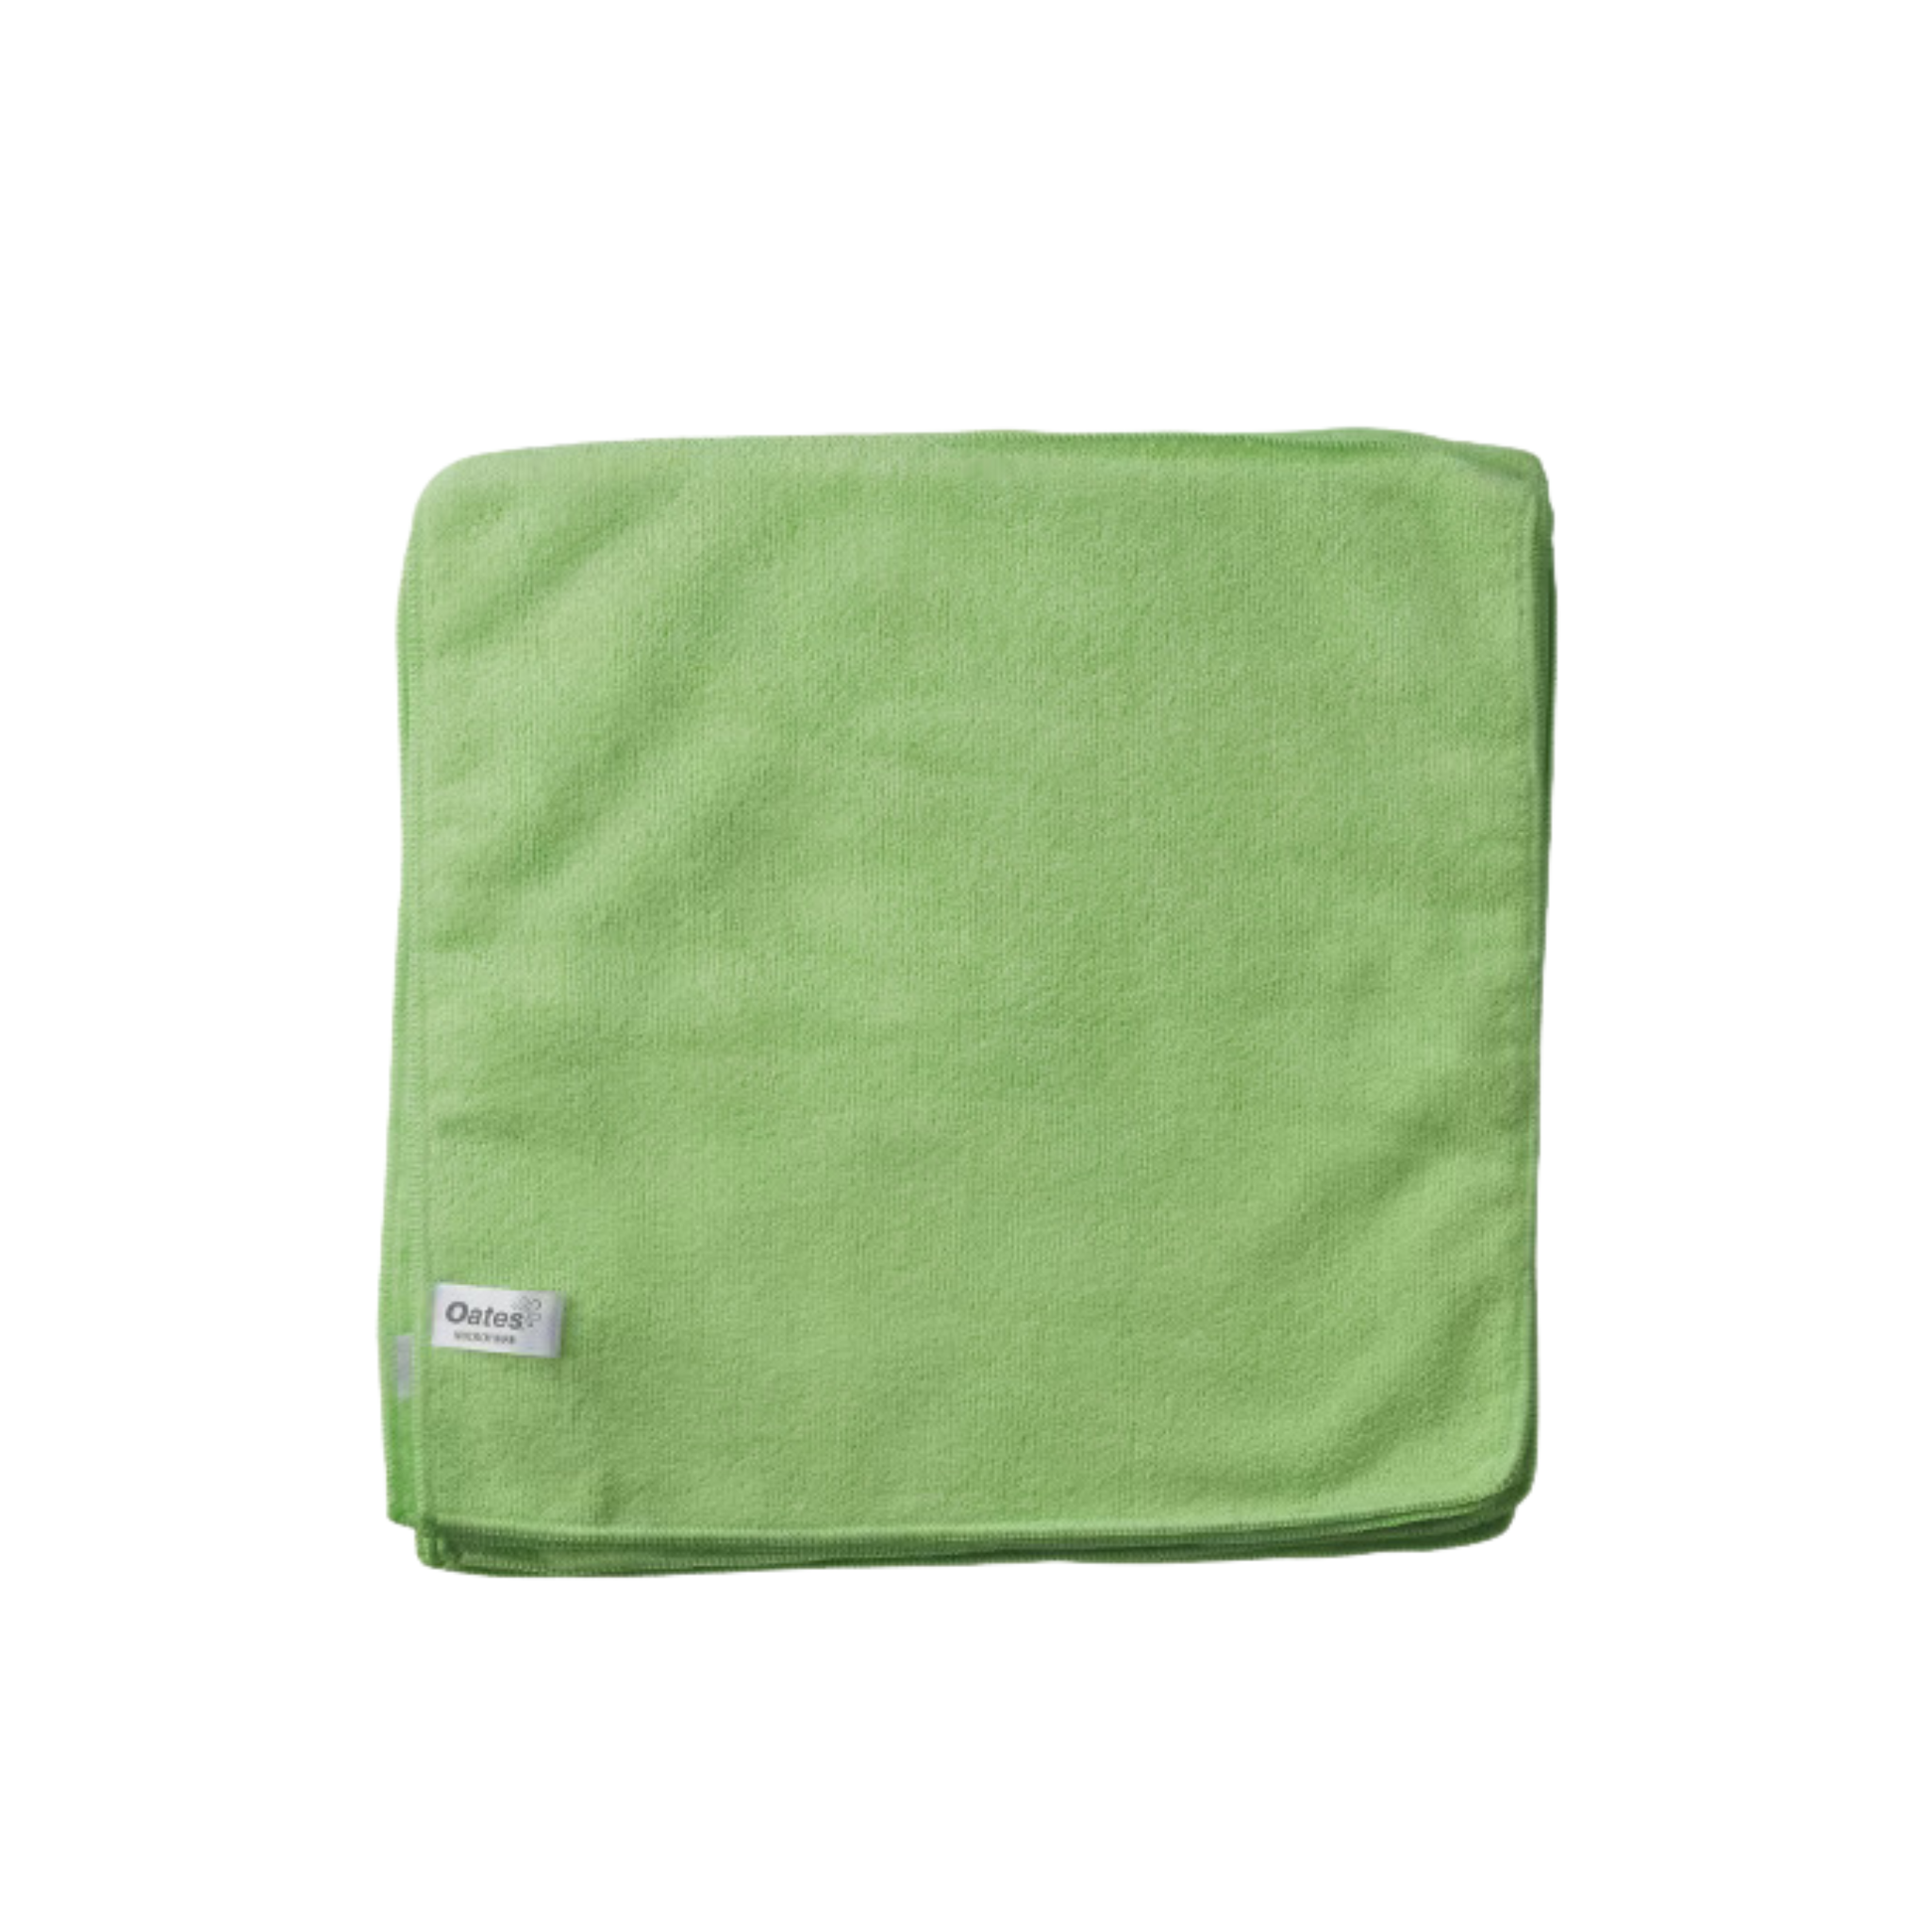 Oates Microfibre Cloths 10 Pack - Green